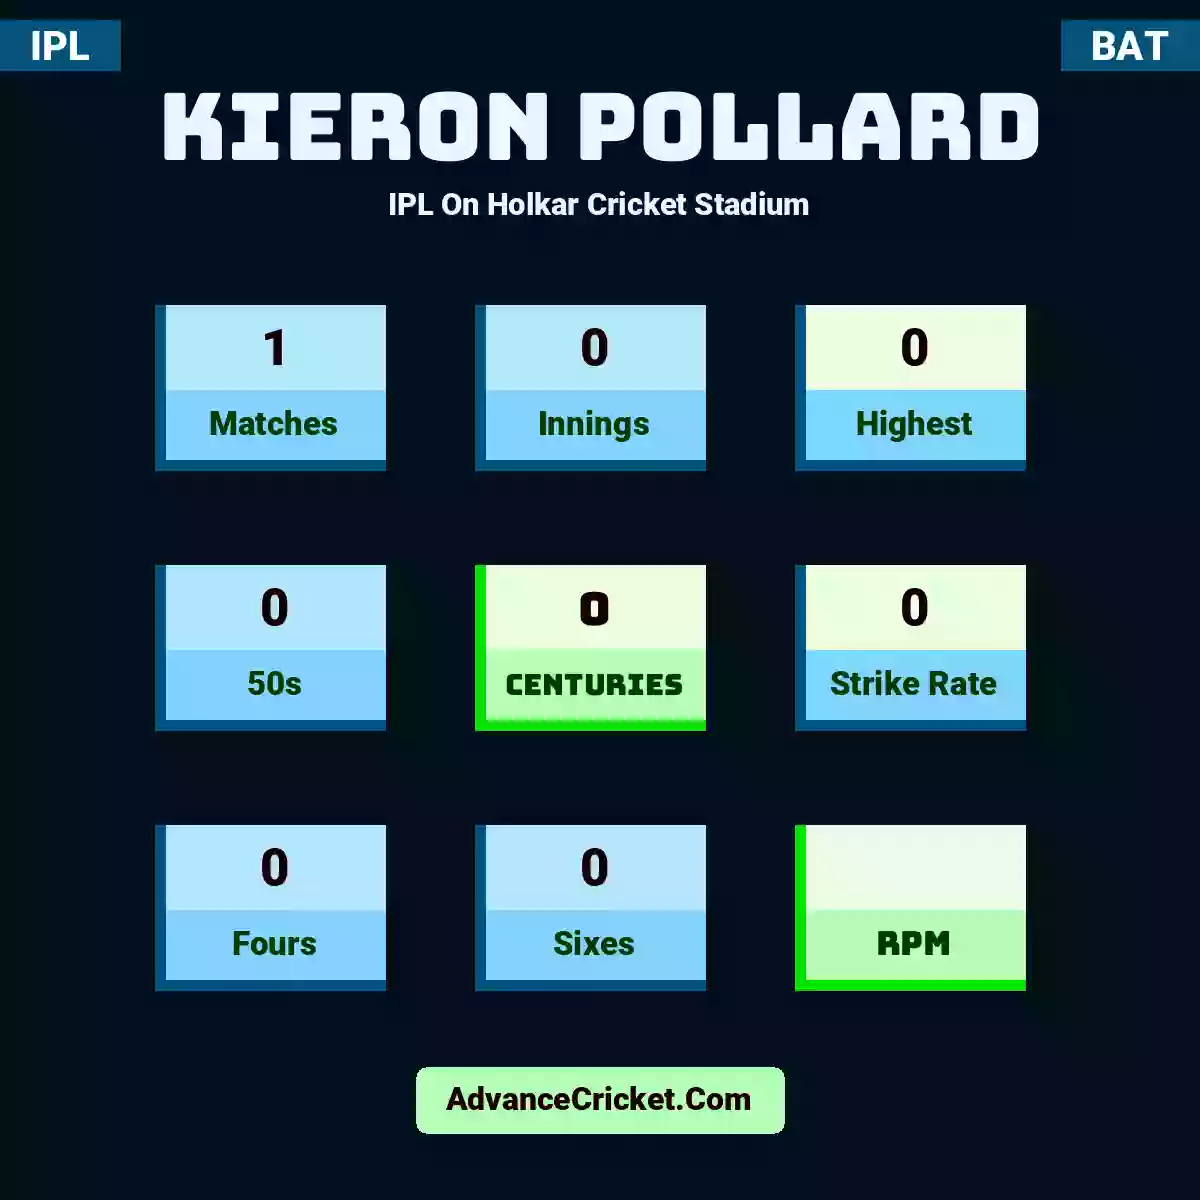 Kieron Pollard IPL  On Holkar Cricket Stadium, Kieron Pollard played 1 matches, scored 0 runs as highest, 0 half-centuries, and 0 centuries, with a strike rate of 0. K.Pollard hit 0 fours and 0 sixes.